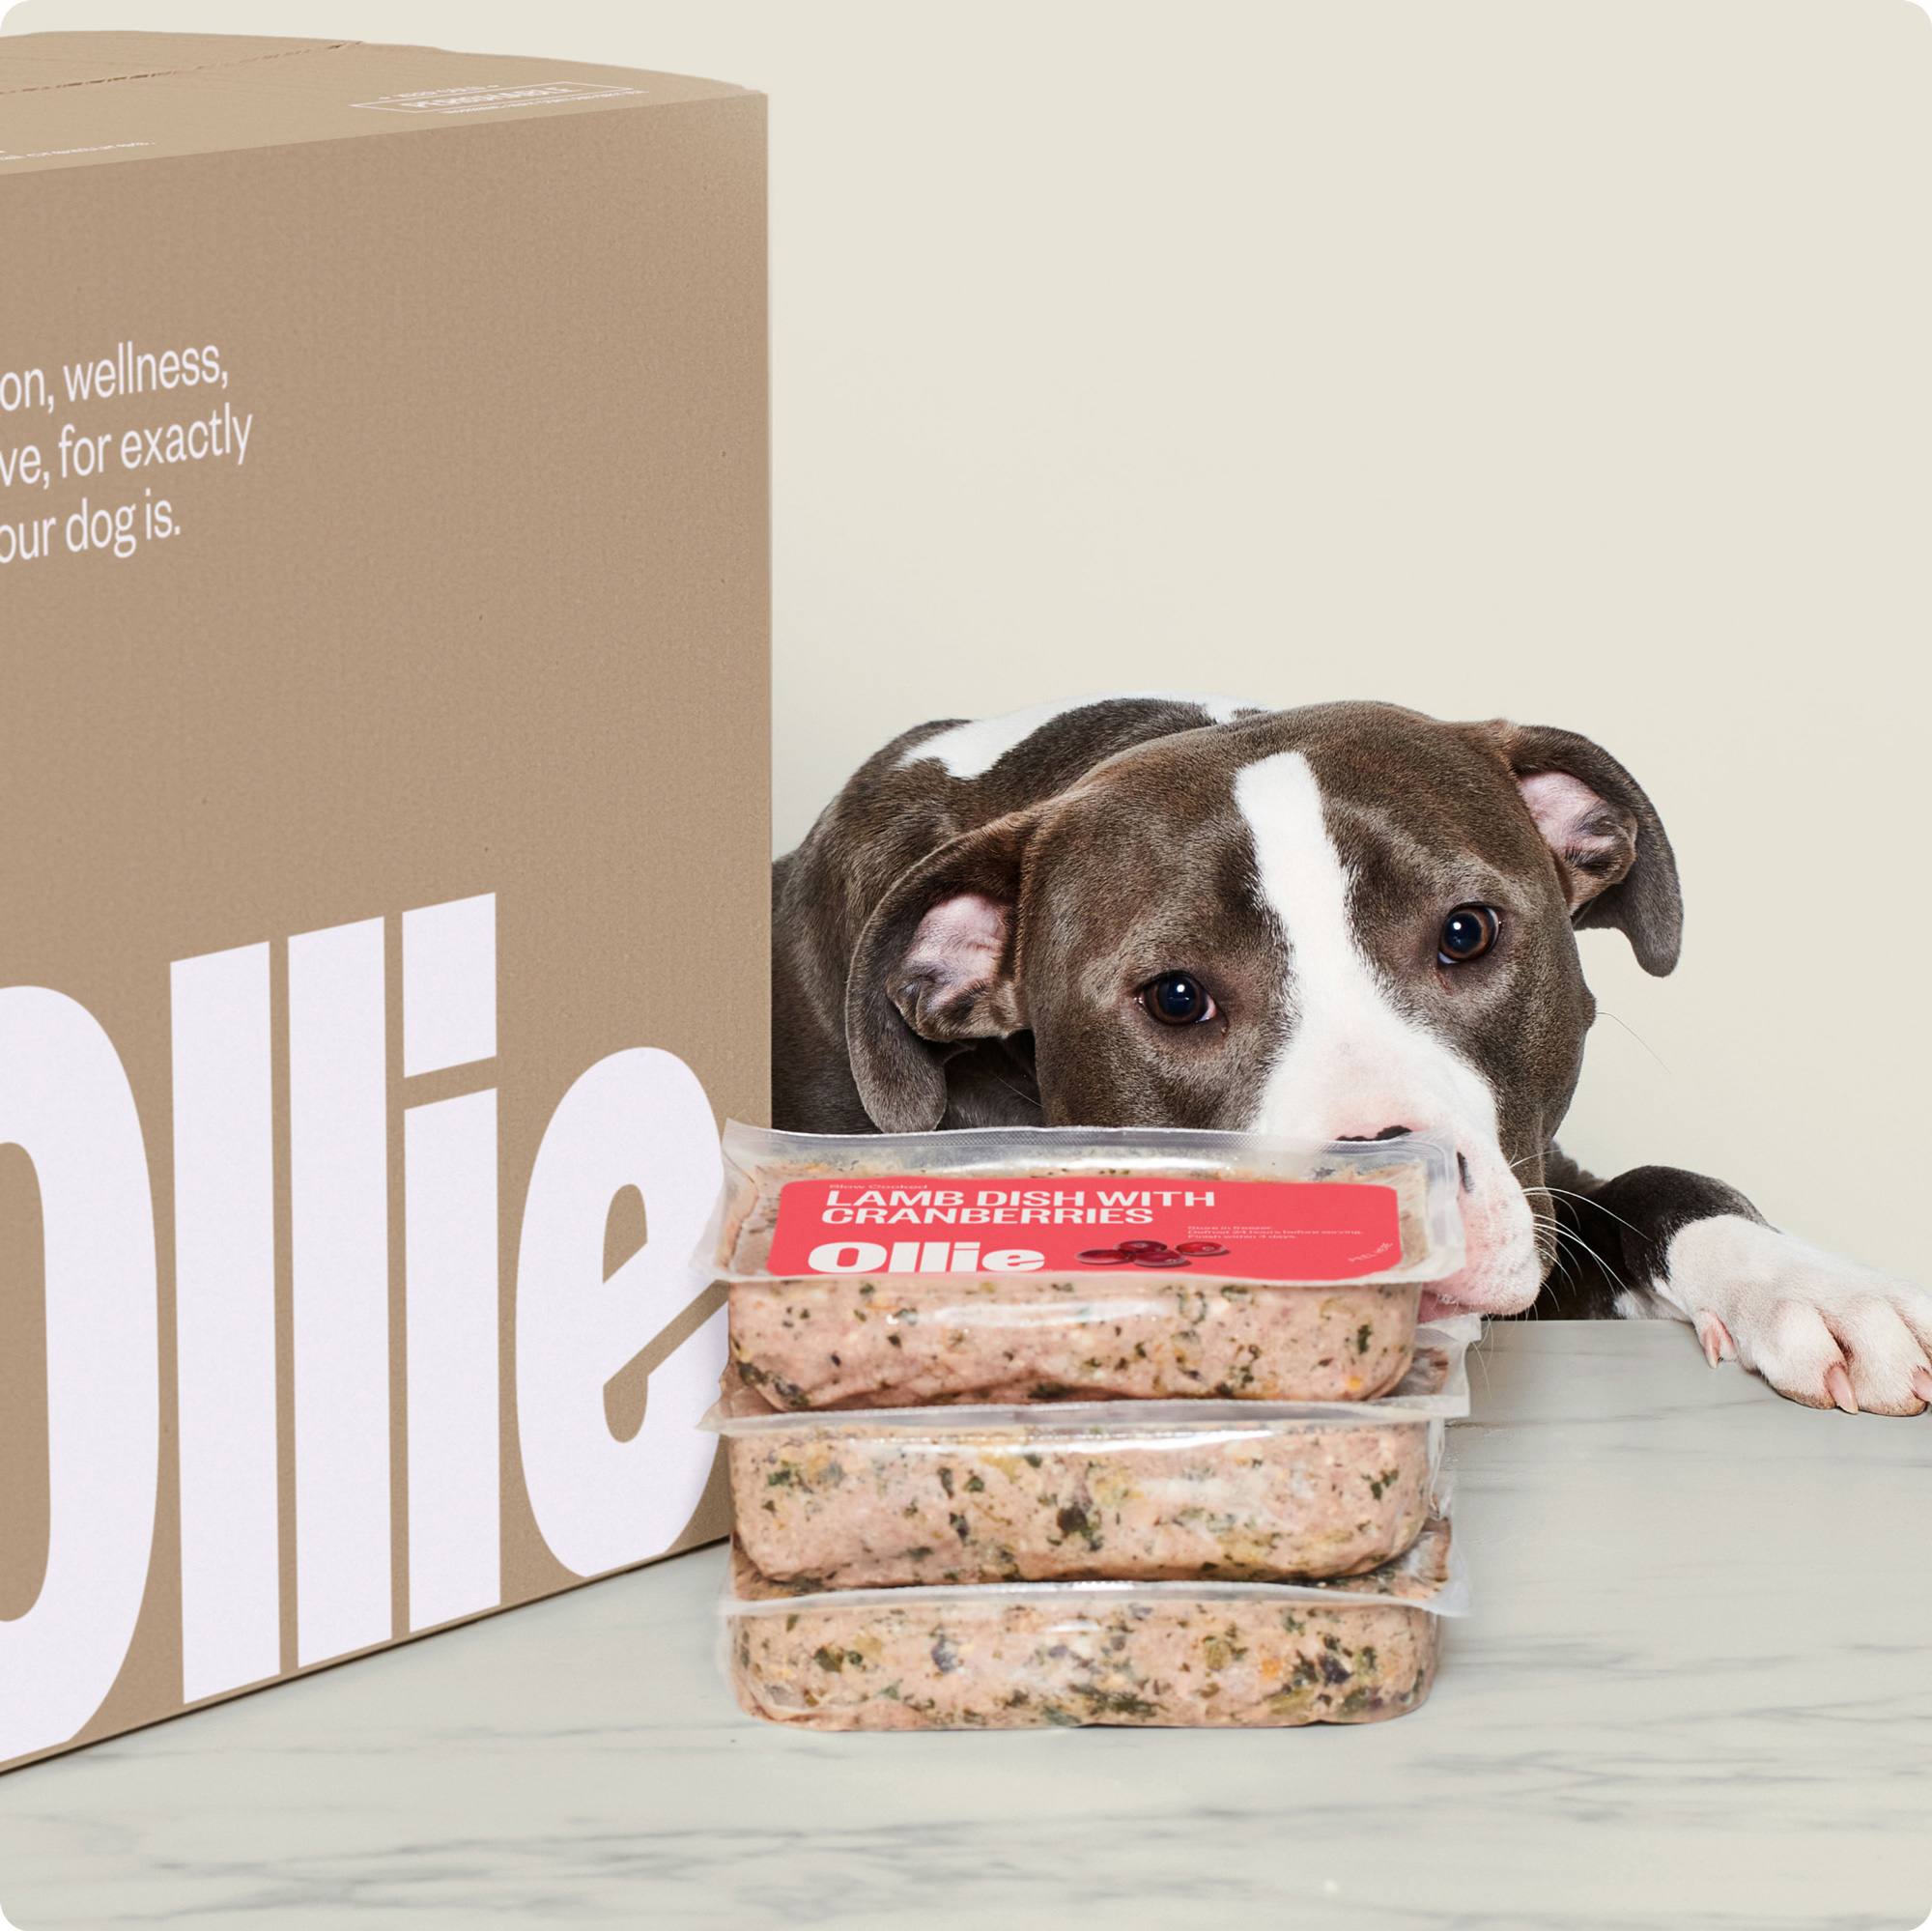 Dog Posing with Ollie Dog Food